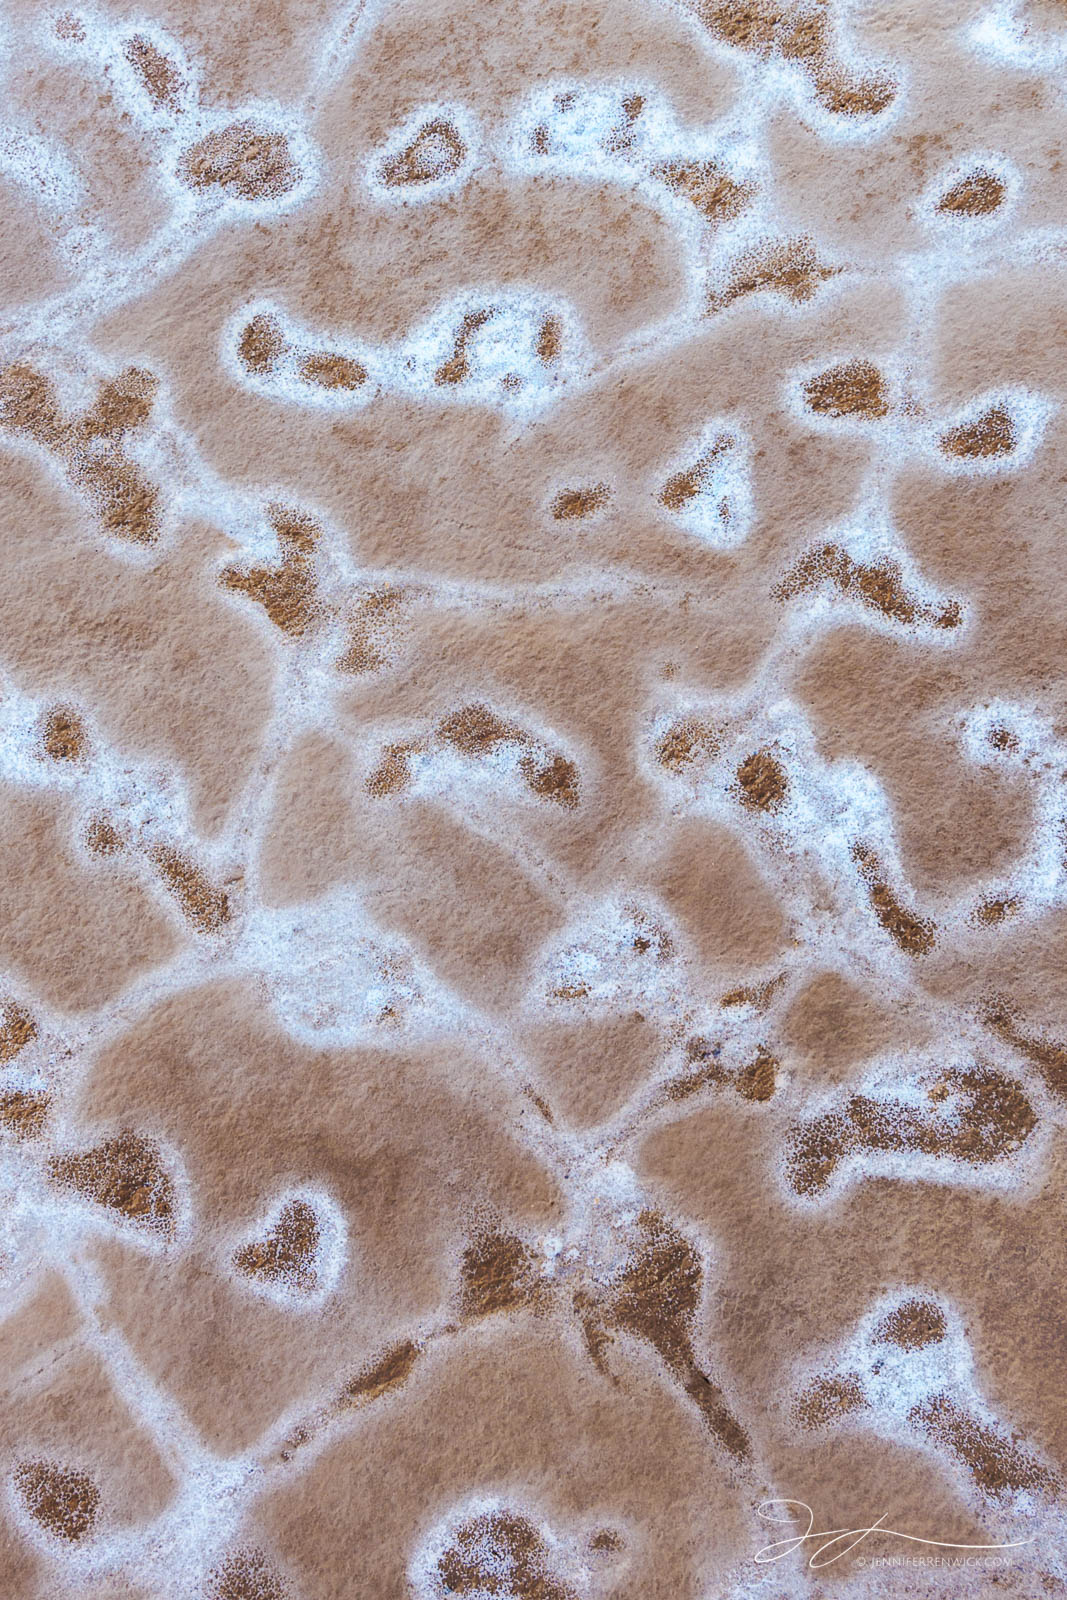 Salt and mud create unique patterns on the desert floor.